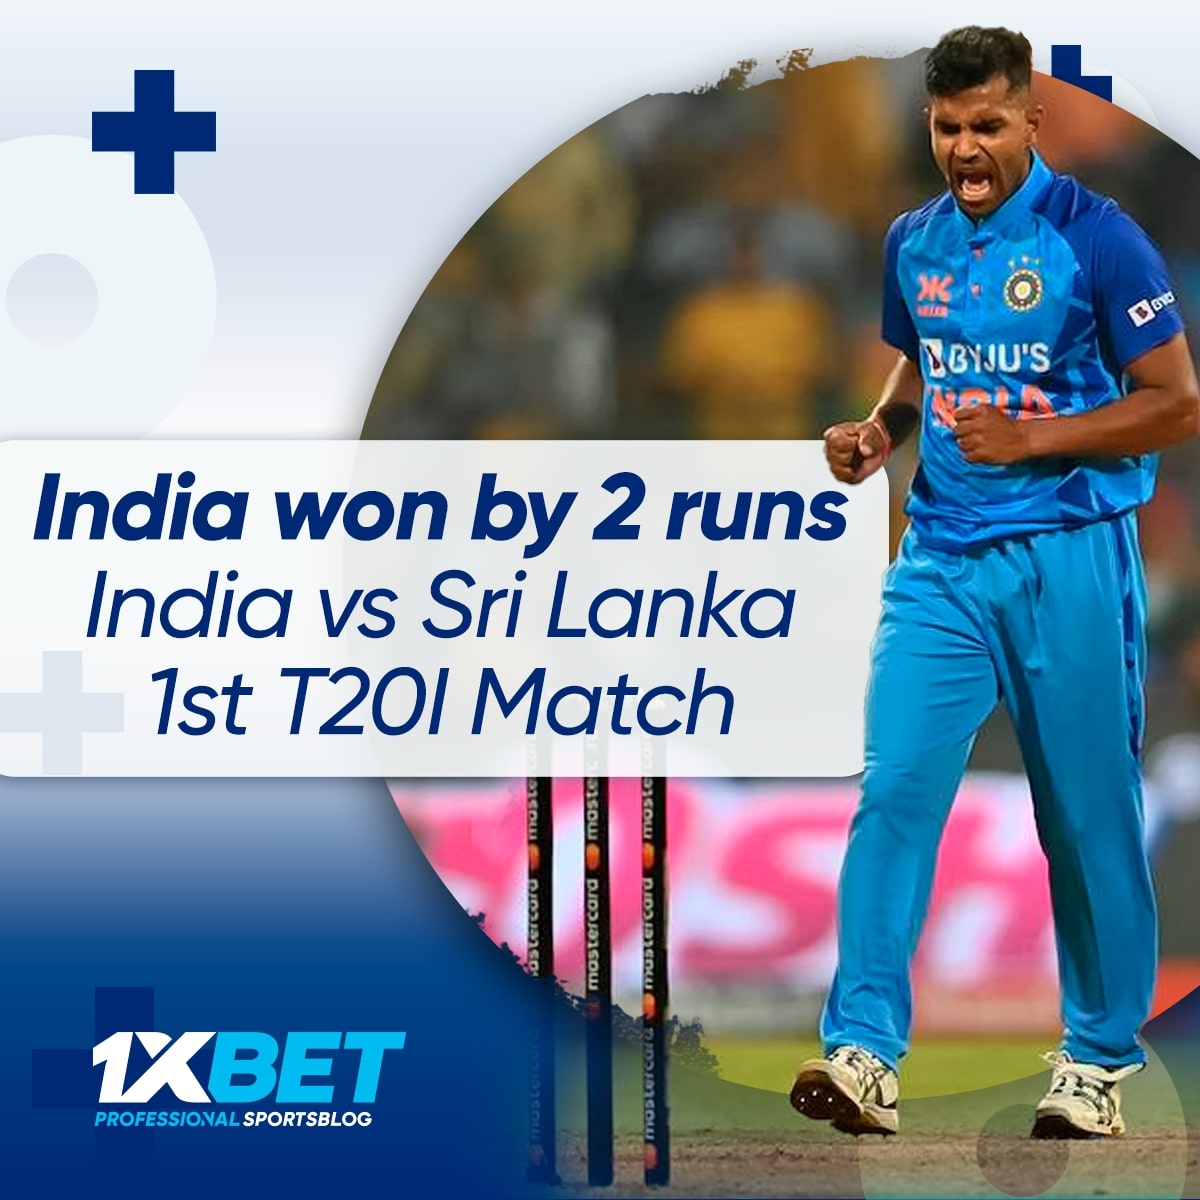 India won by 2 runs, India vs Sri Lanka, 1st T20I Match